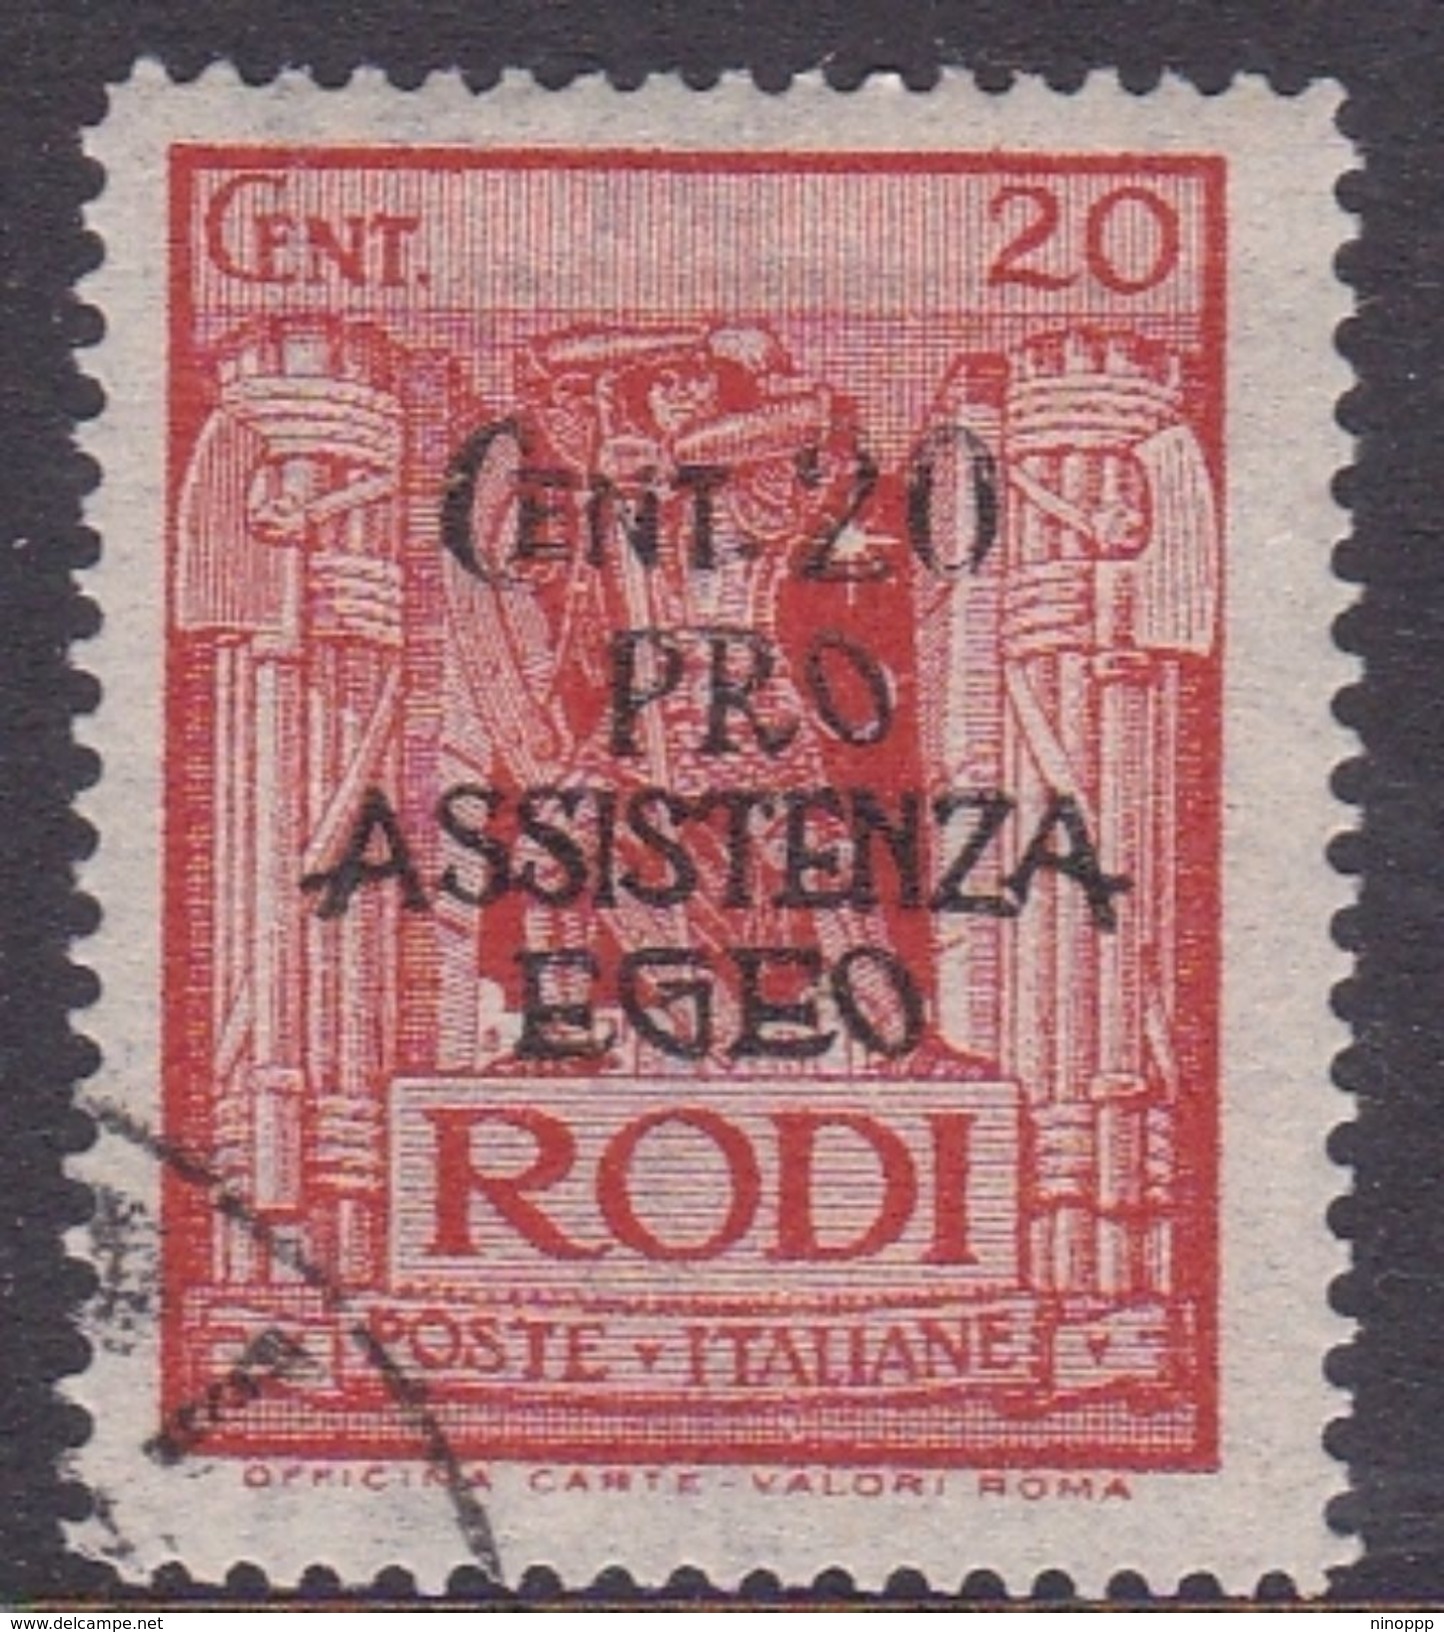 Italy-Colonies And Territories-Aegean General Issue-Rodi S120 1943 Pro Assistenza Egeo,20c+20c Red Used - Amtliche Ausgaben